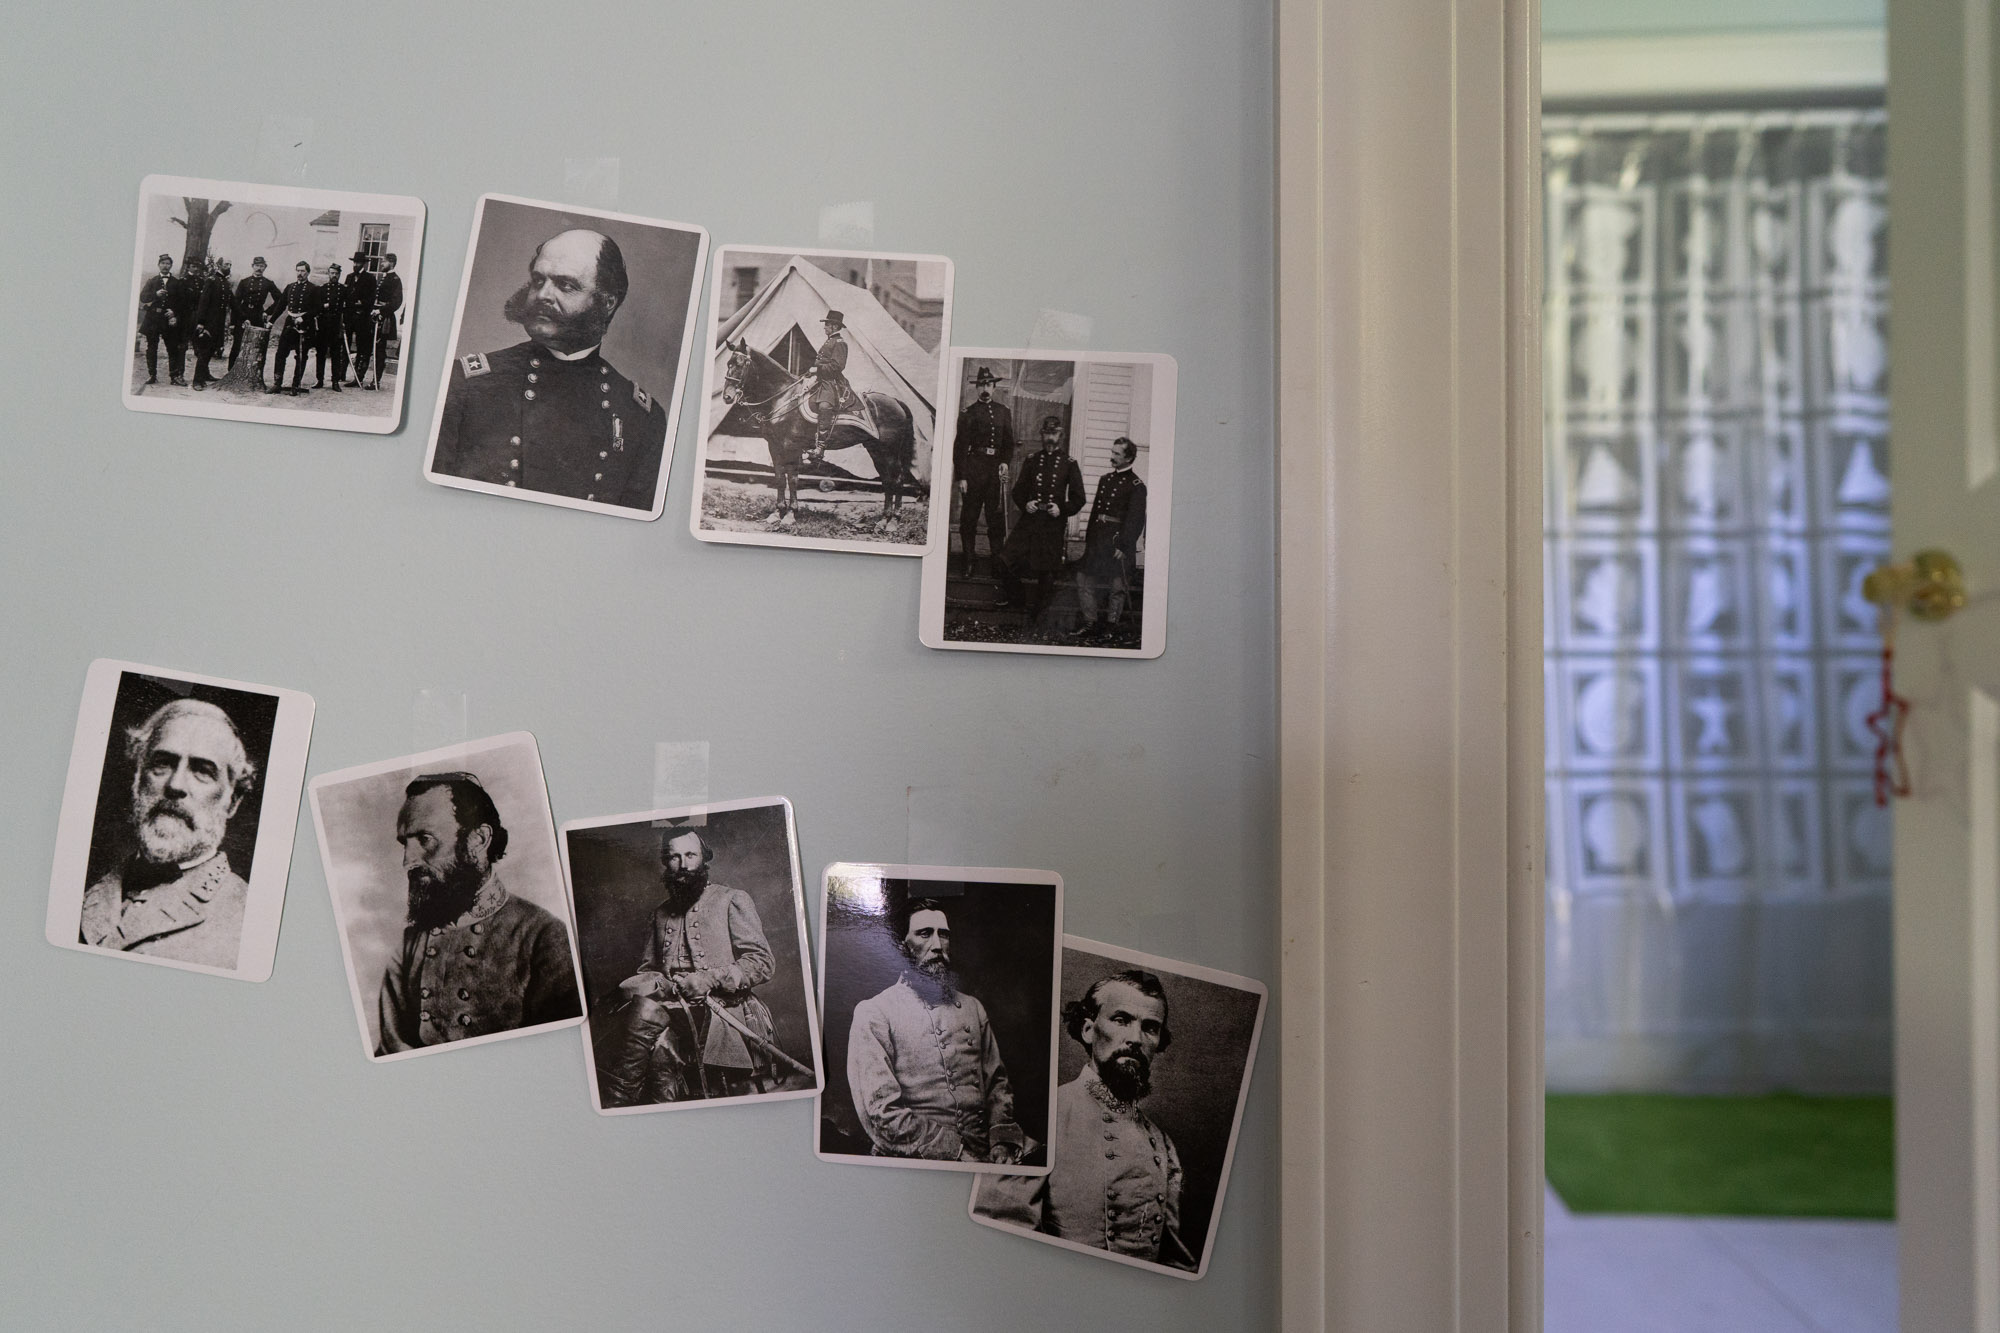 historic photos taped on wall - documentary family photography